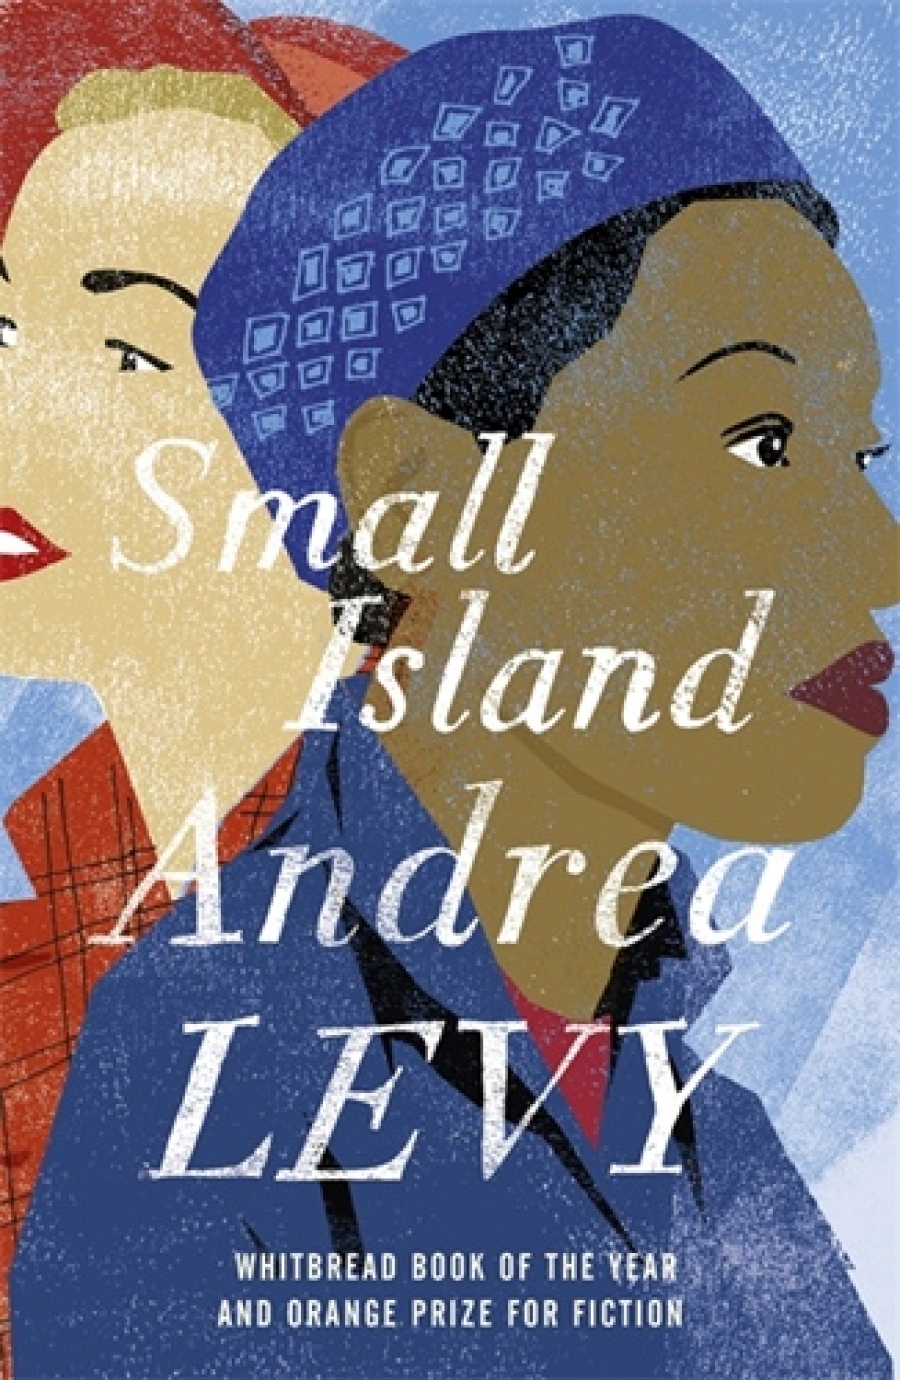 Levy, Andrea Small Island 